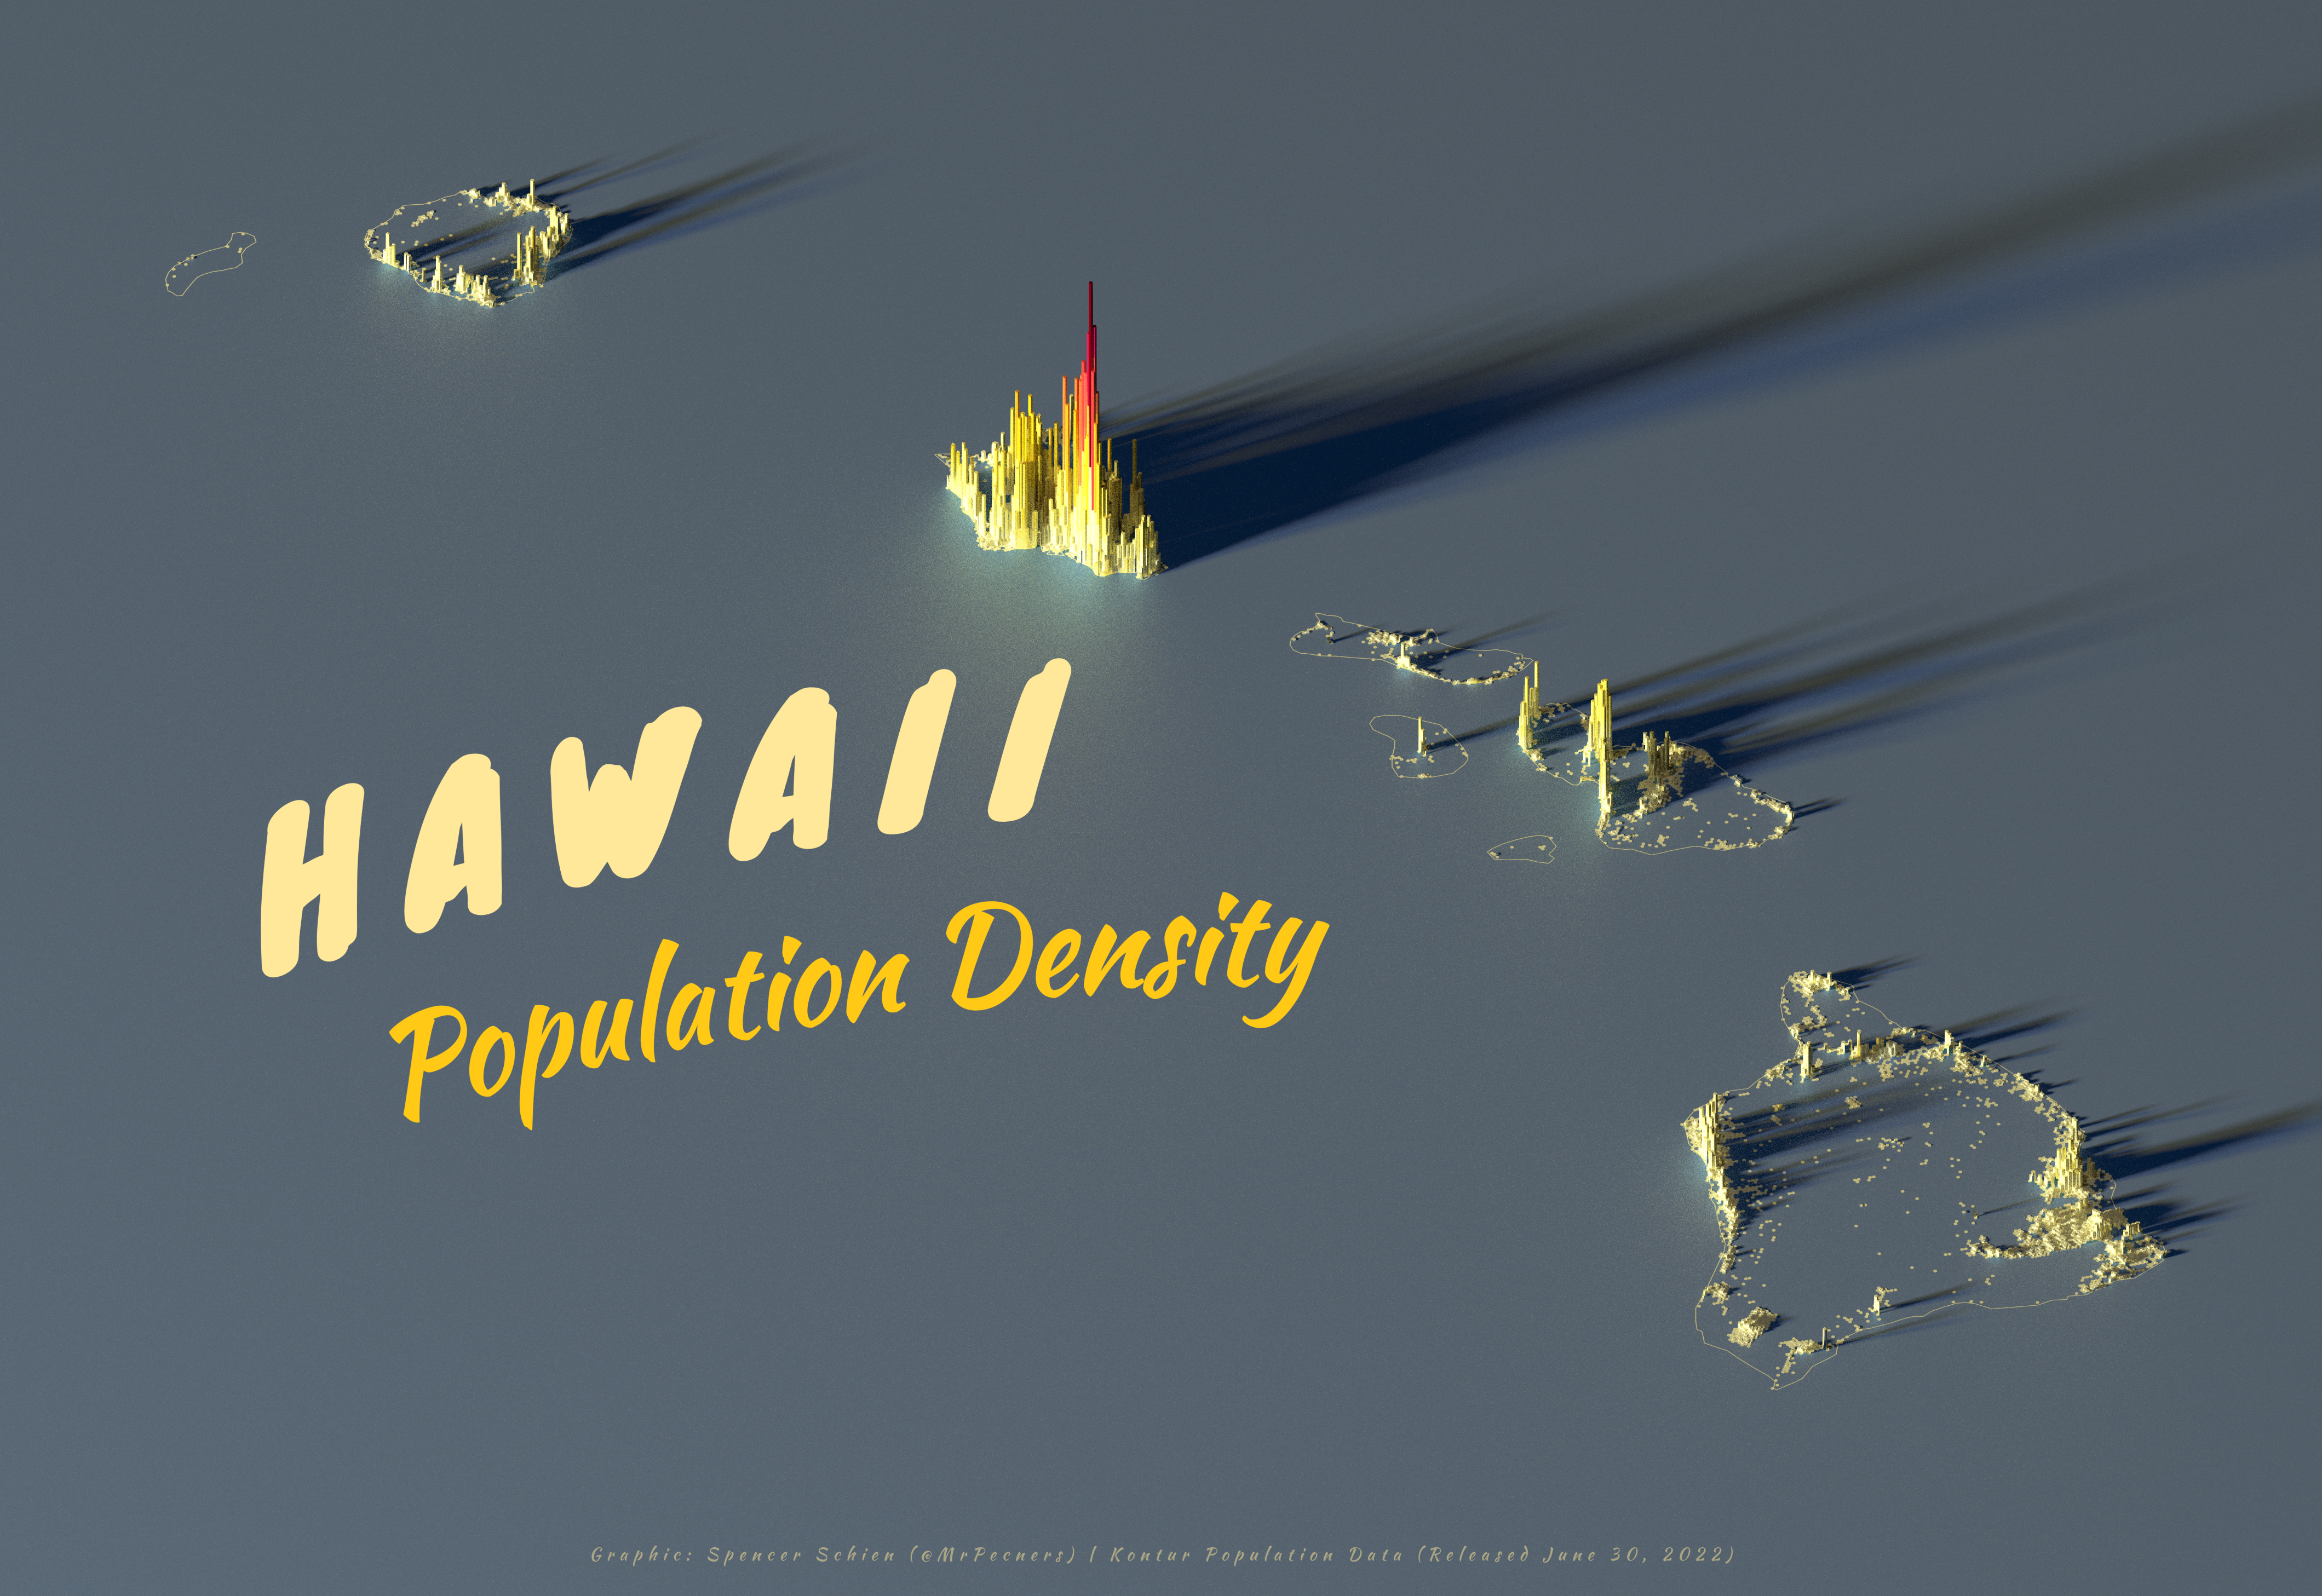 Hawaii Population Density